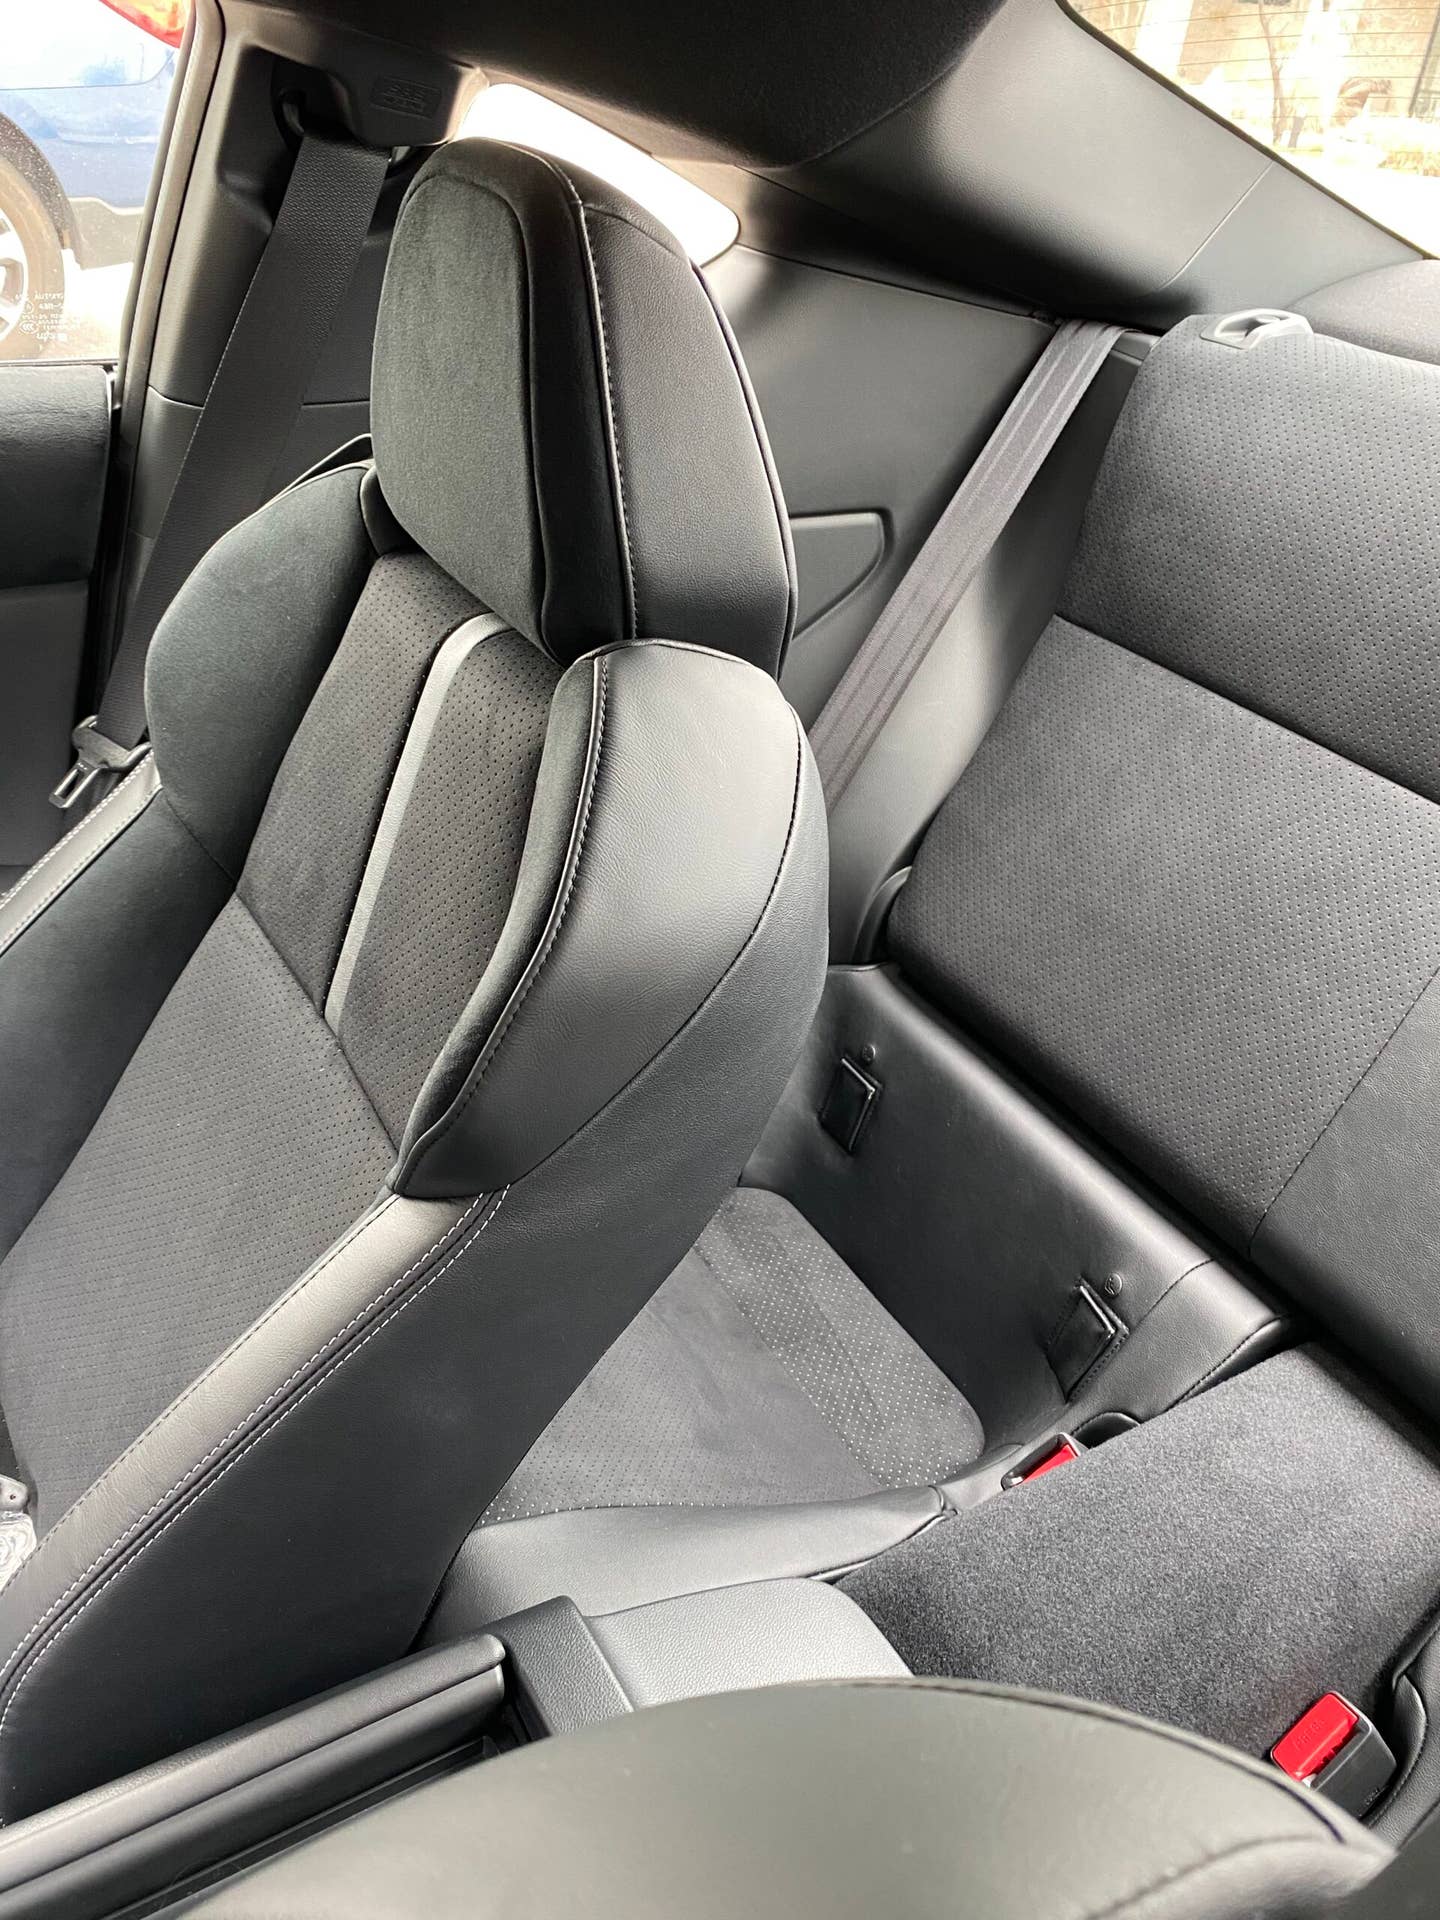 Toyota GR86 back seat